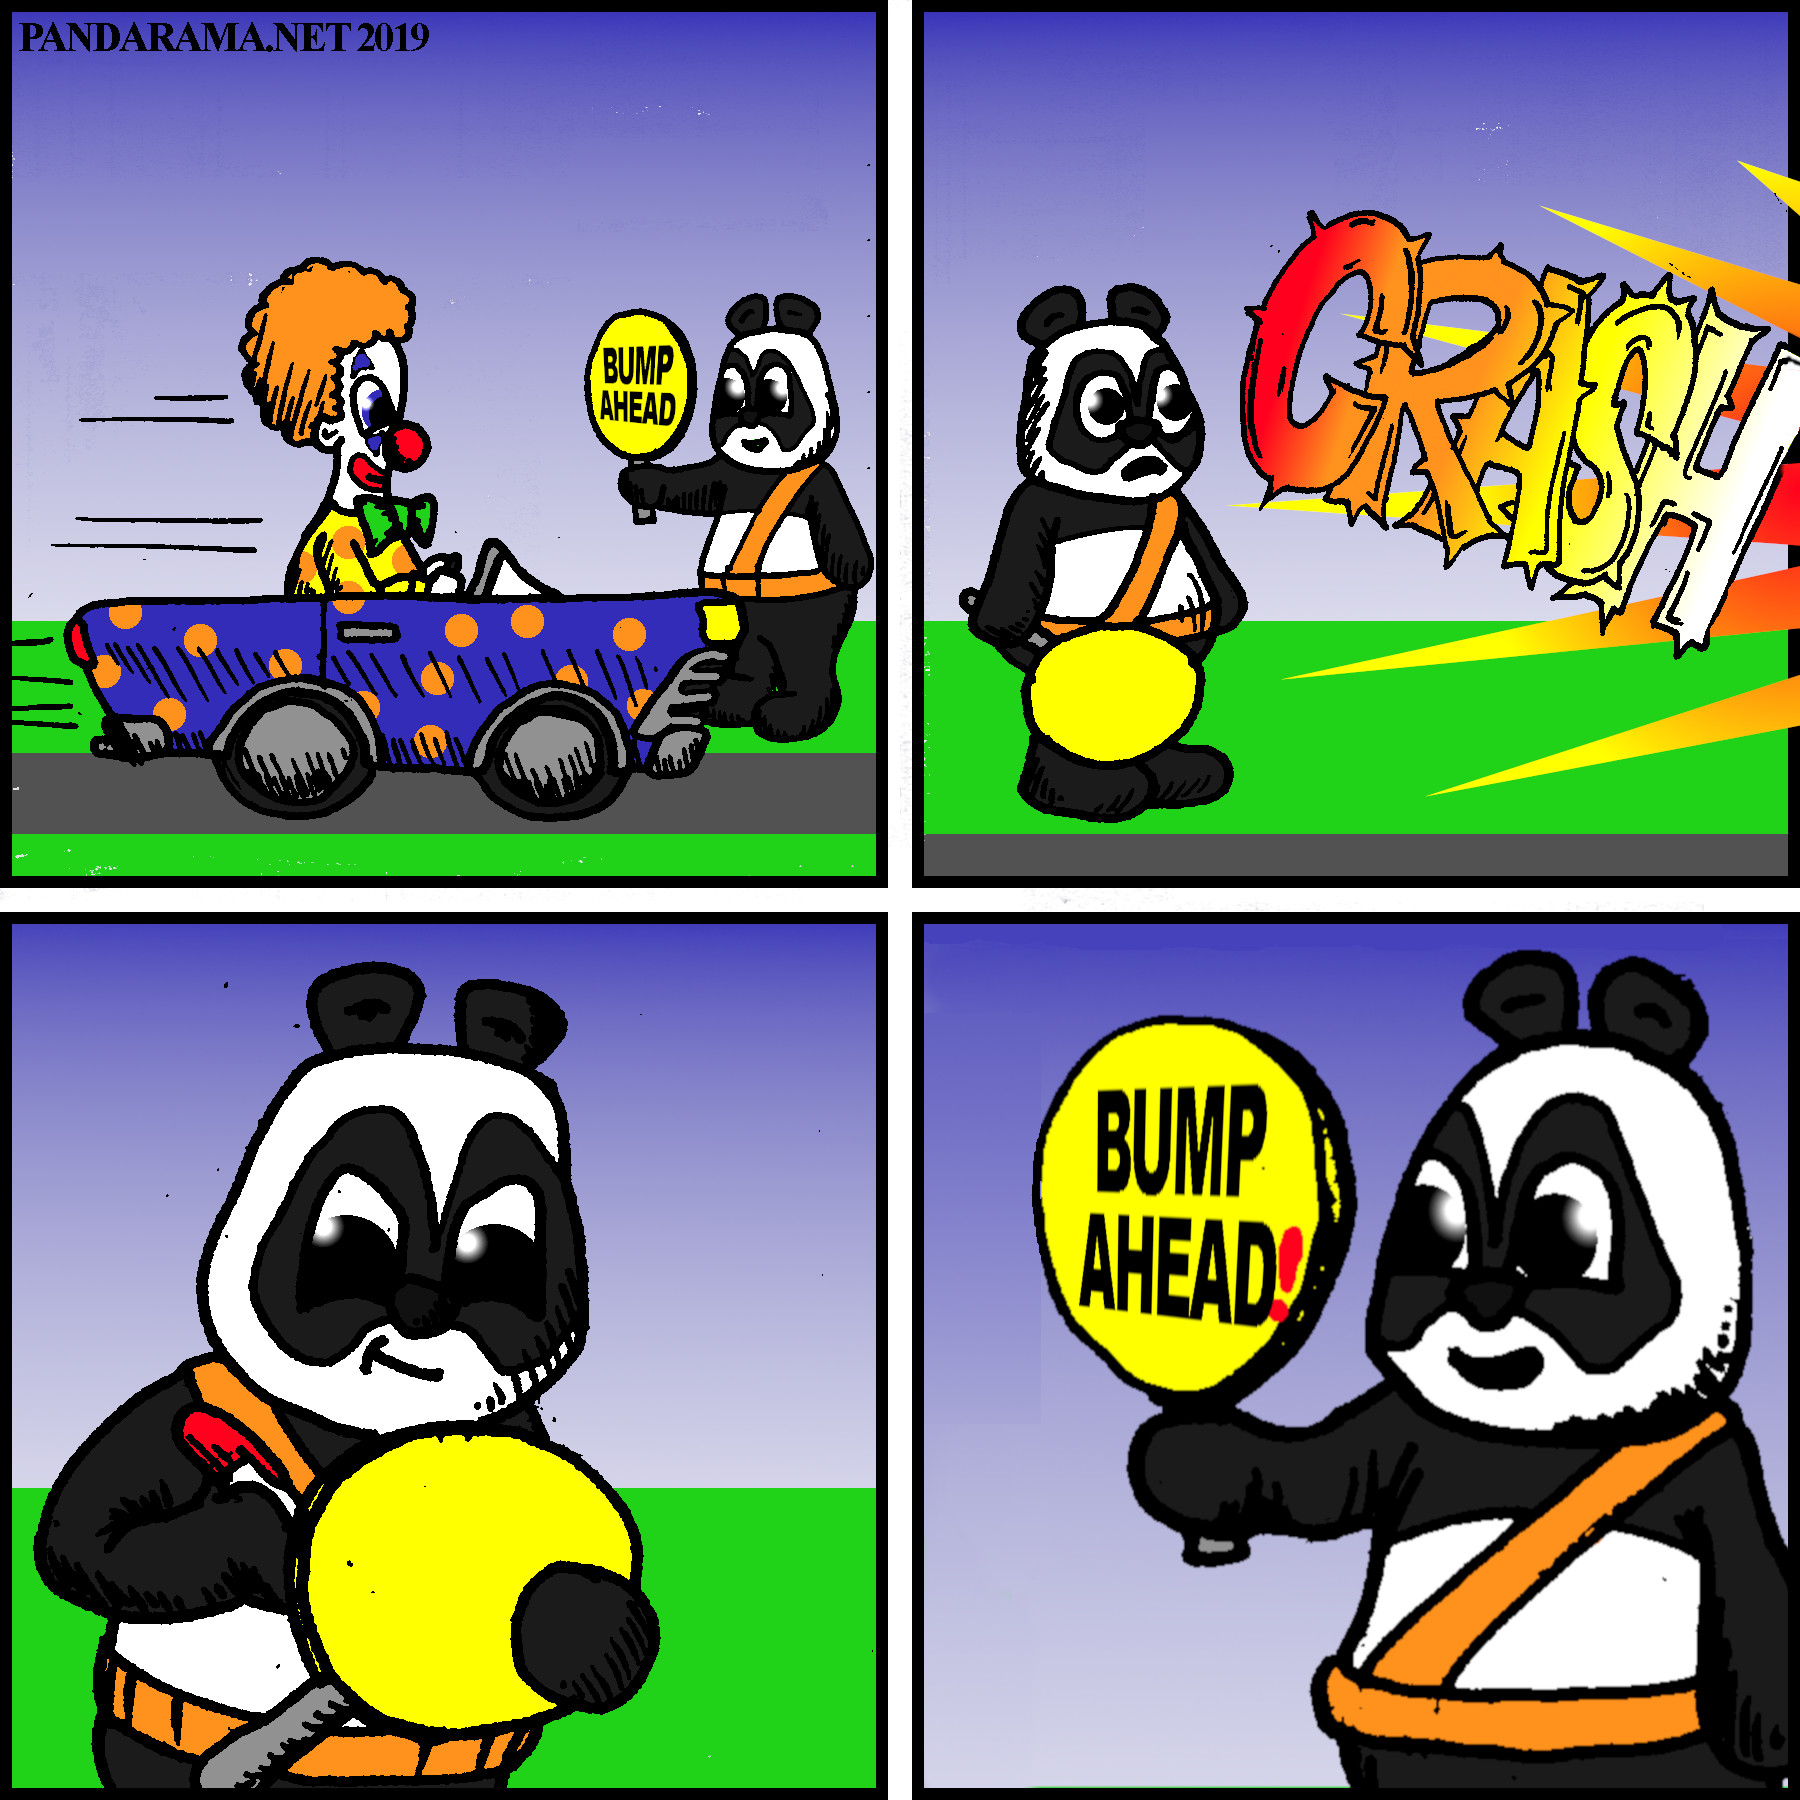 pandarama cartoon where panda crossing guard adds exclamation point to 'bump ahead' sign after crash.